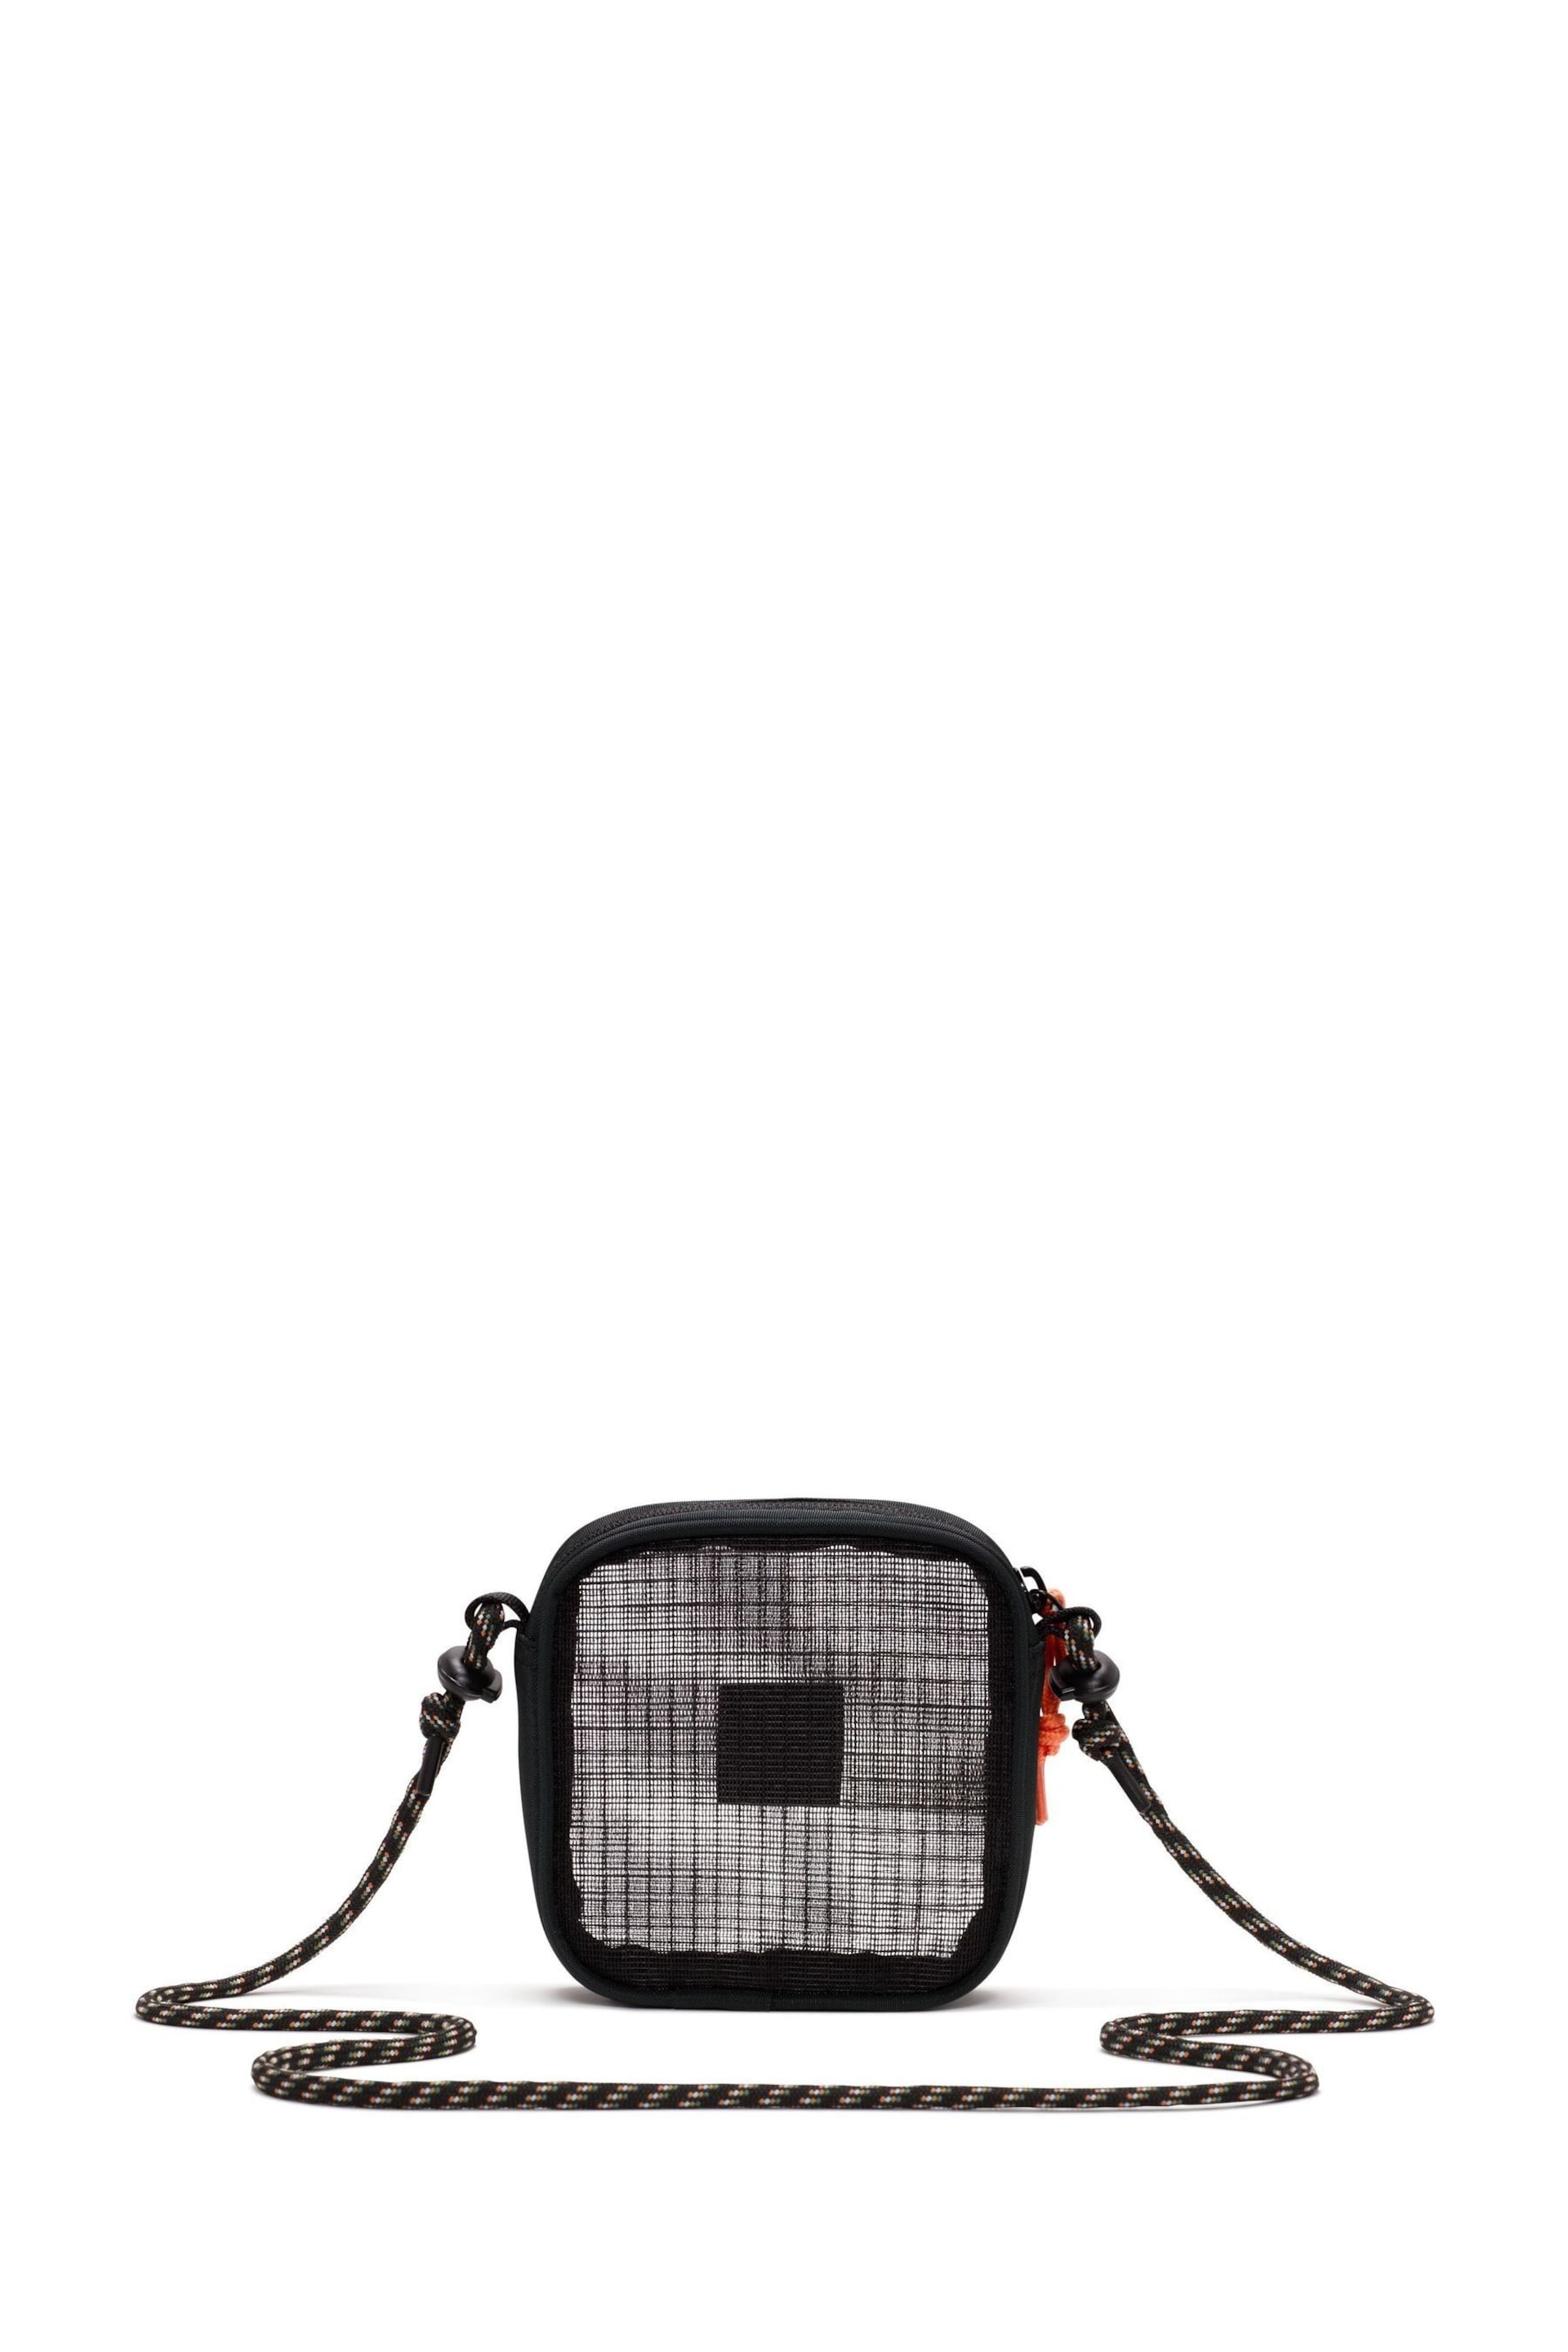 Converse Black Crossbody Pocket Bag - Image 2 of 6